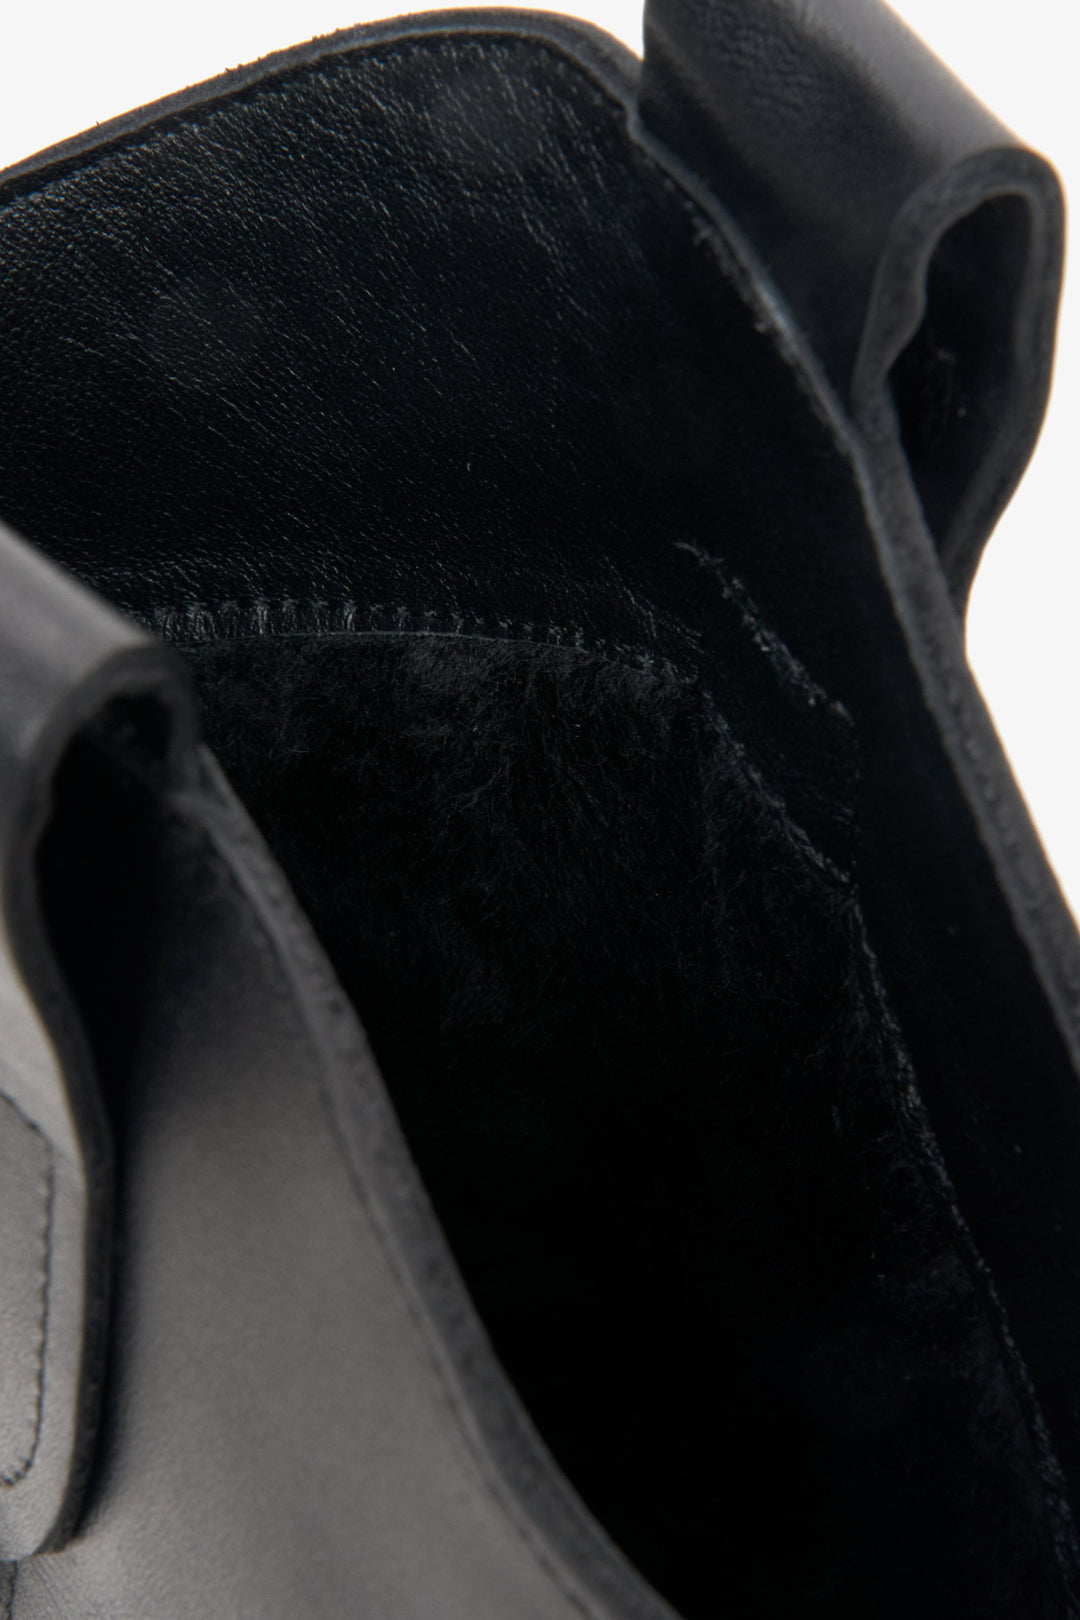 Women's black leather cowboy boots by Estro - close-up on details.